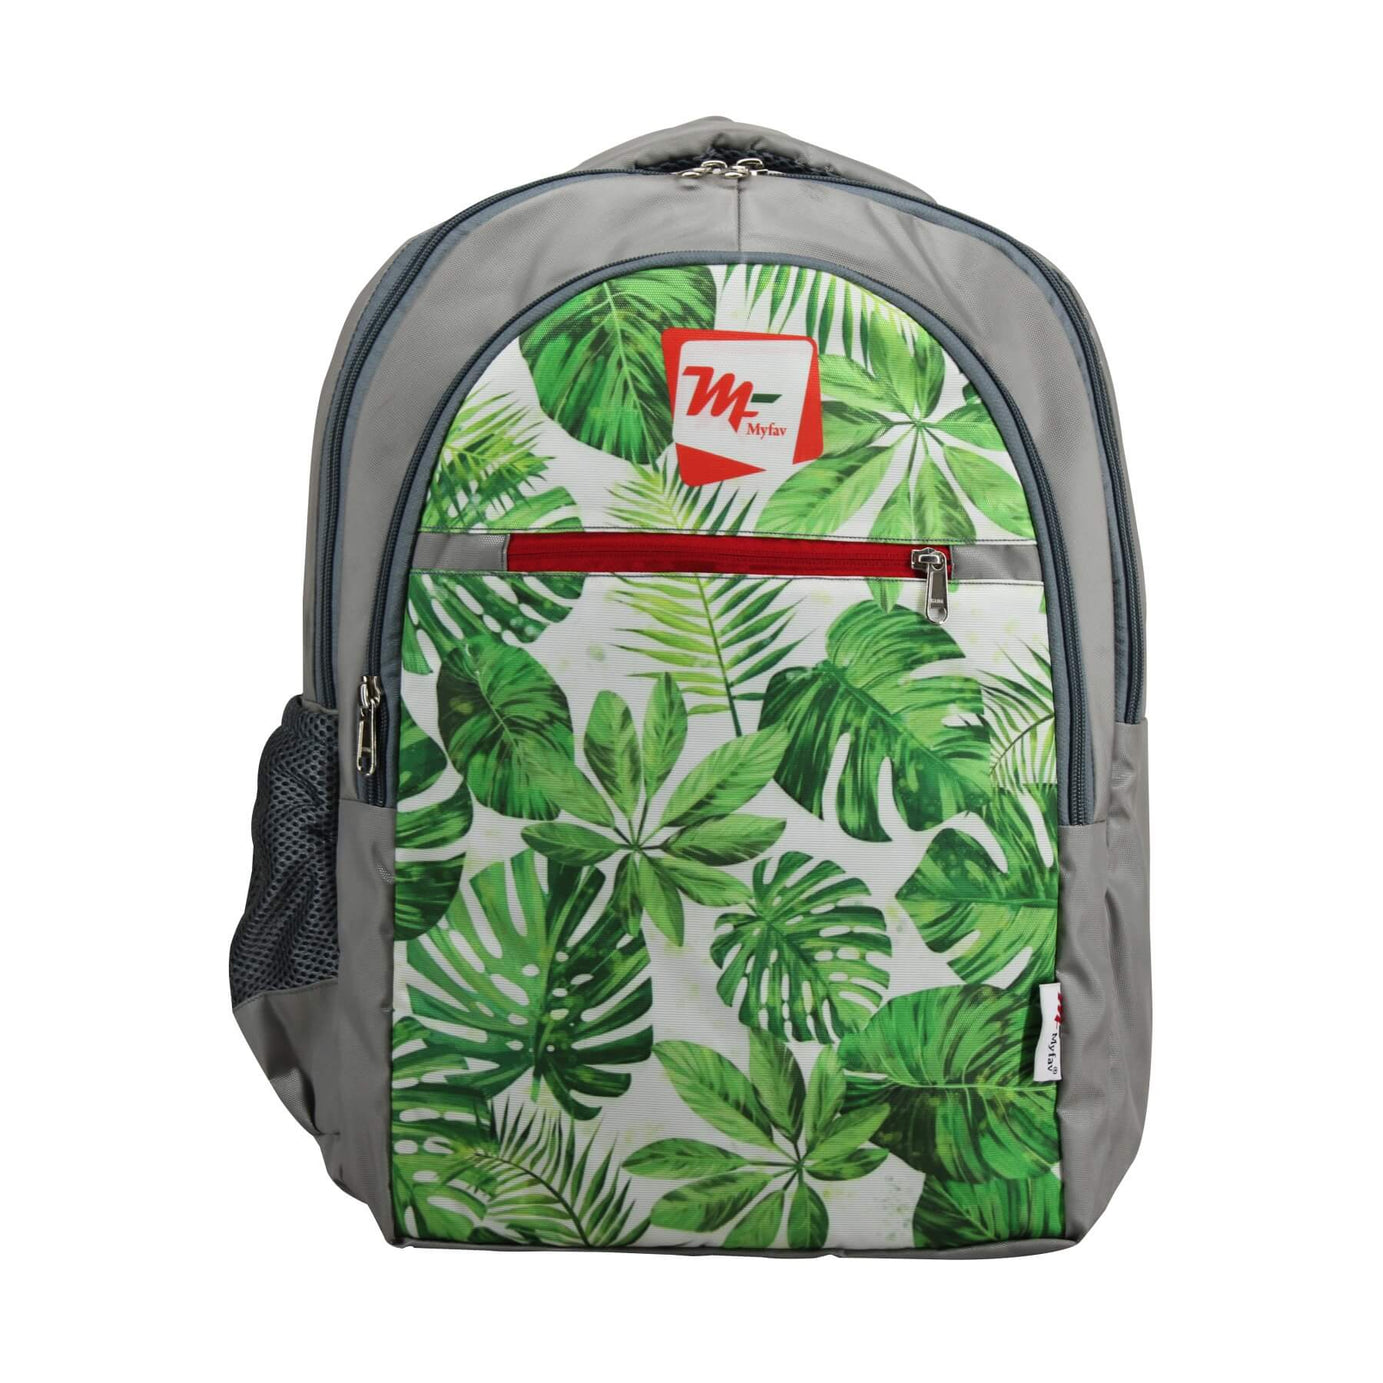 My Fav Nature Leafs Print Laptop Backpack / School Bag for Boys Girls